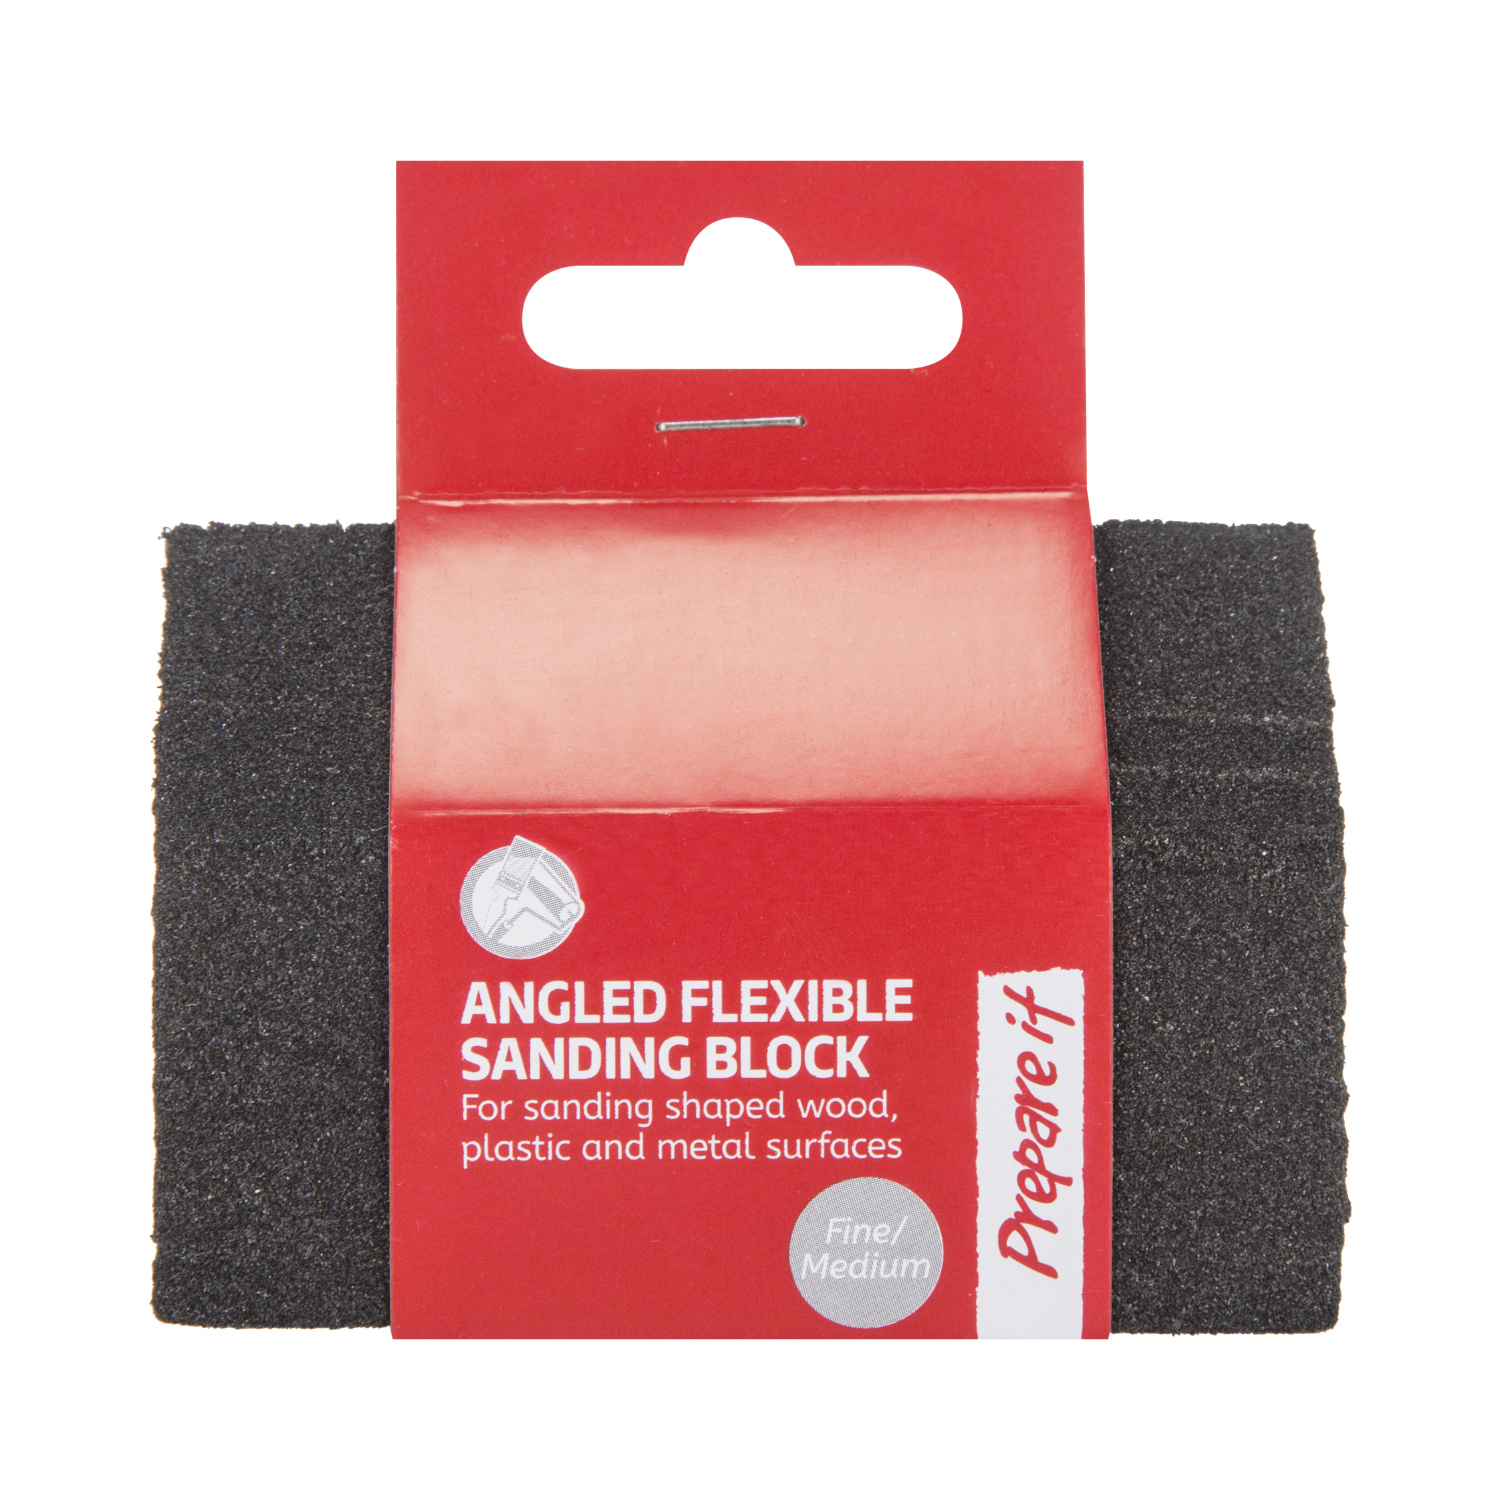 Prepare it Fine and Medium Angled Flexible Sanding Block Image